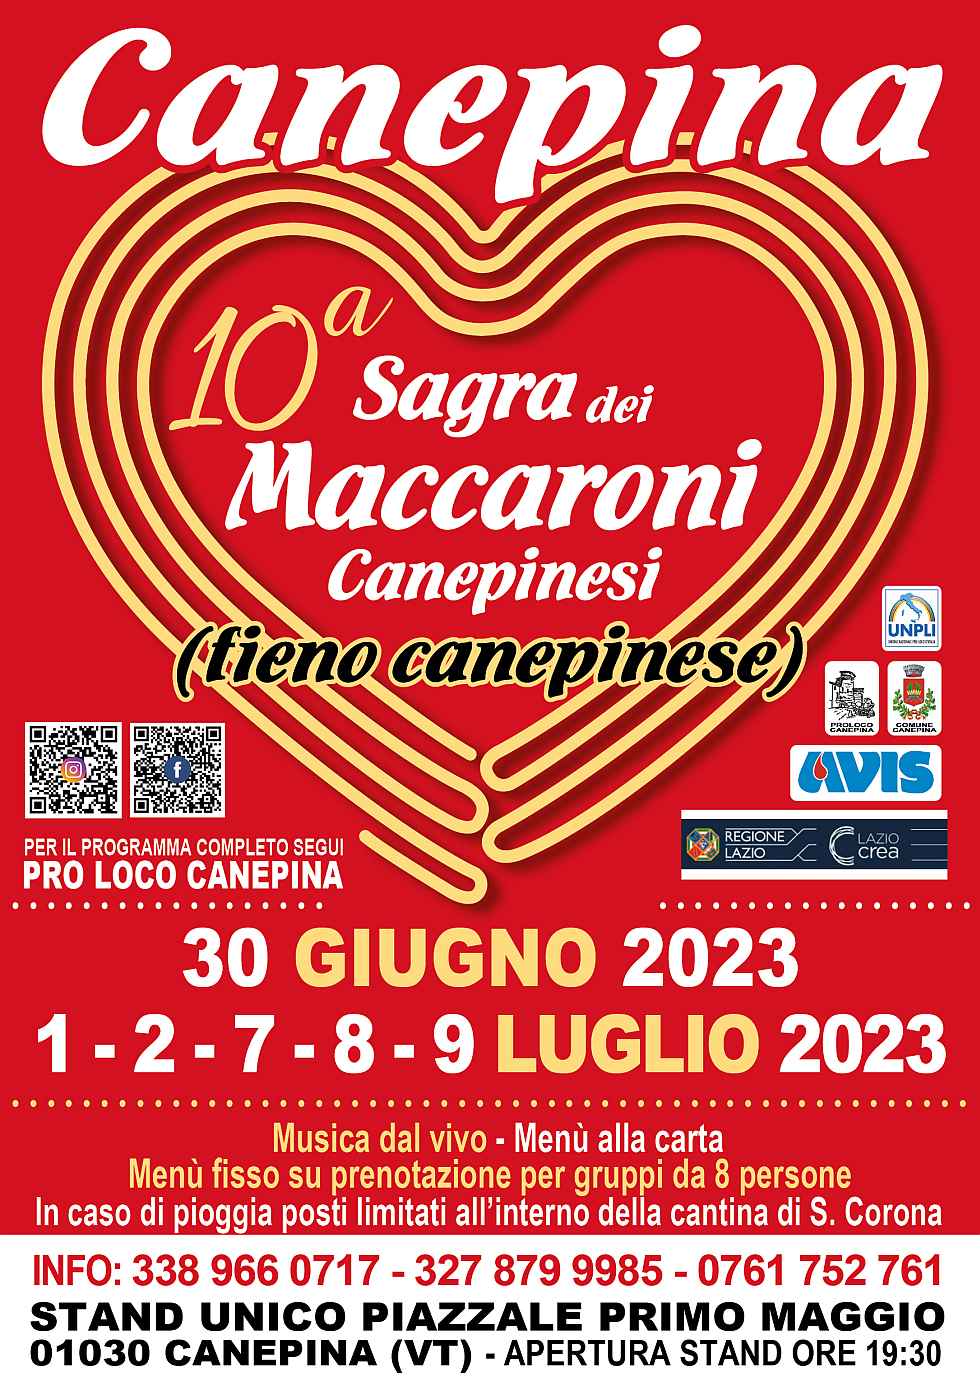 Canepina (VT)
"9^ Sagra dei Maccaroni Canepinesi"
1-2-3 Luglio 2022 